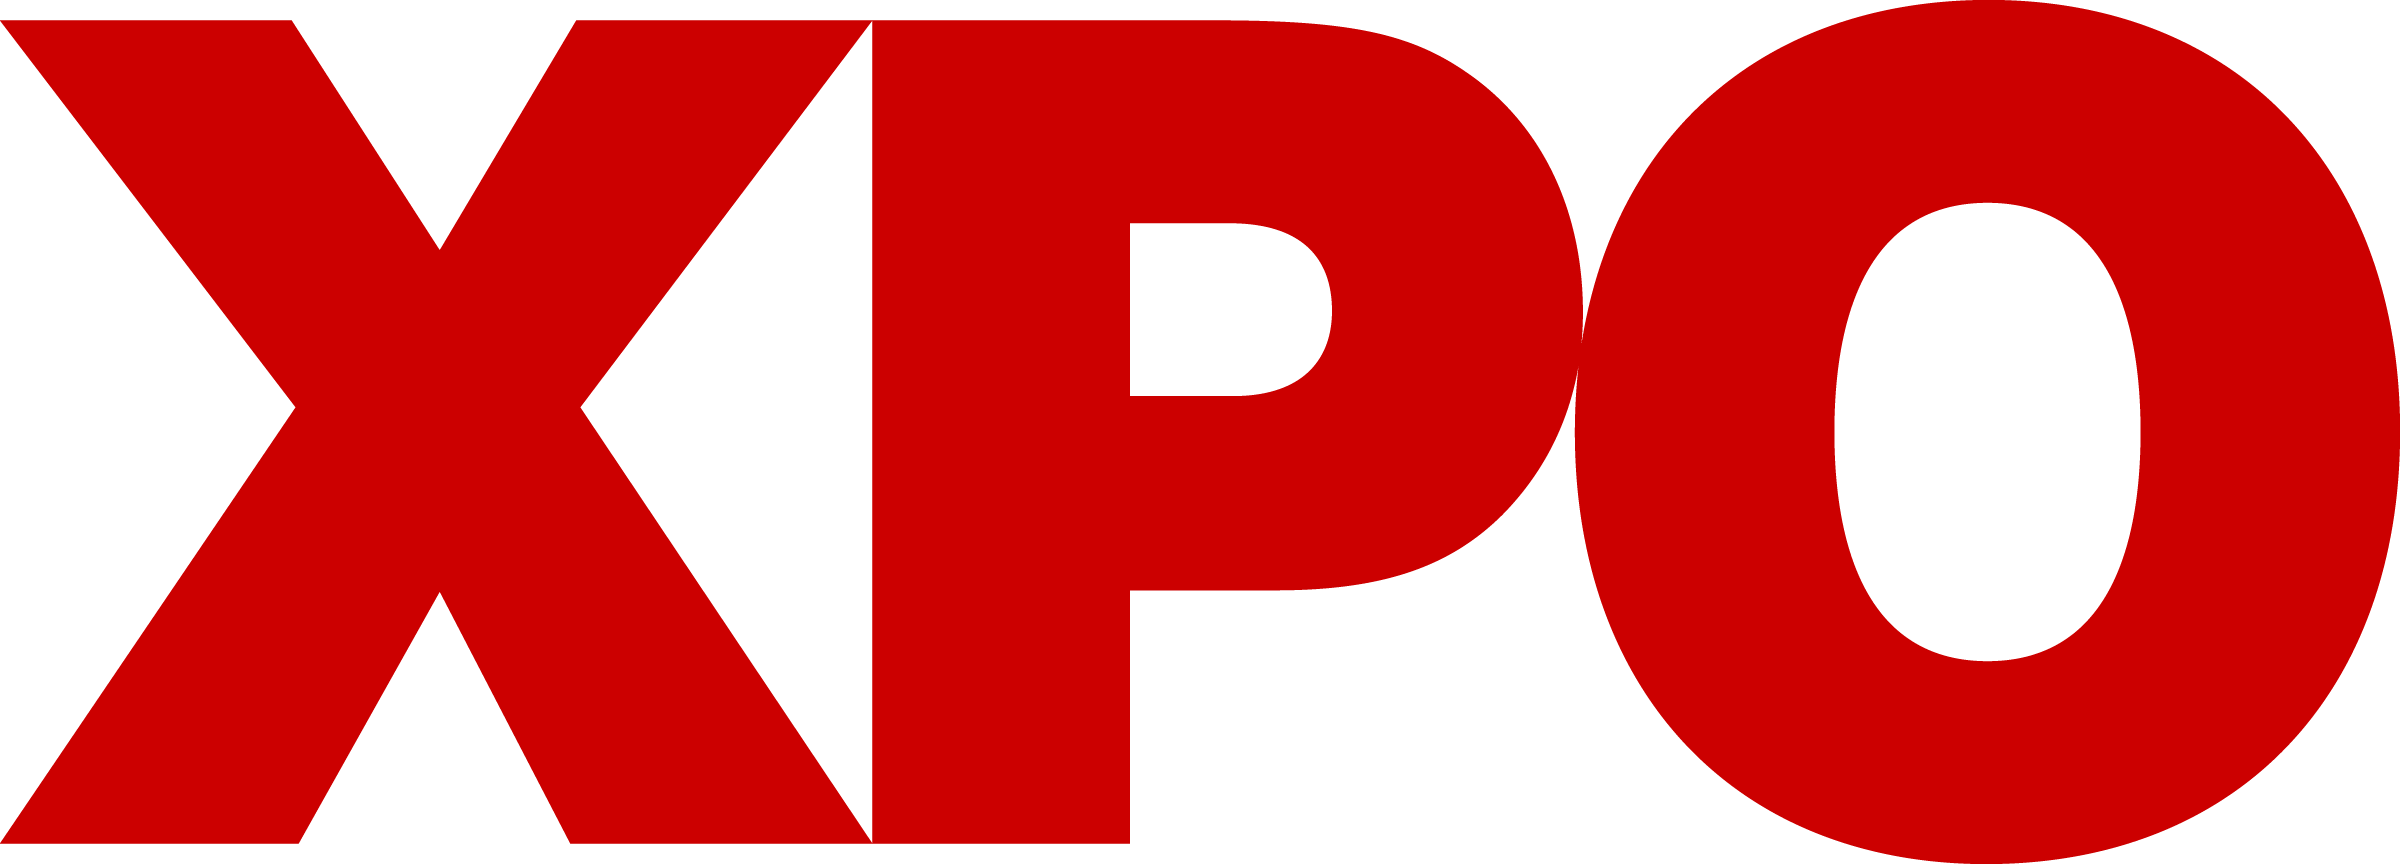 XPO_rgb.png